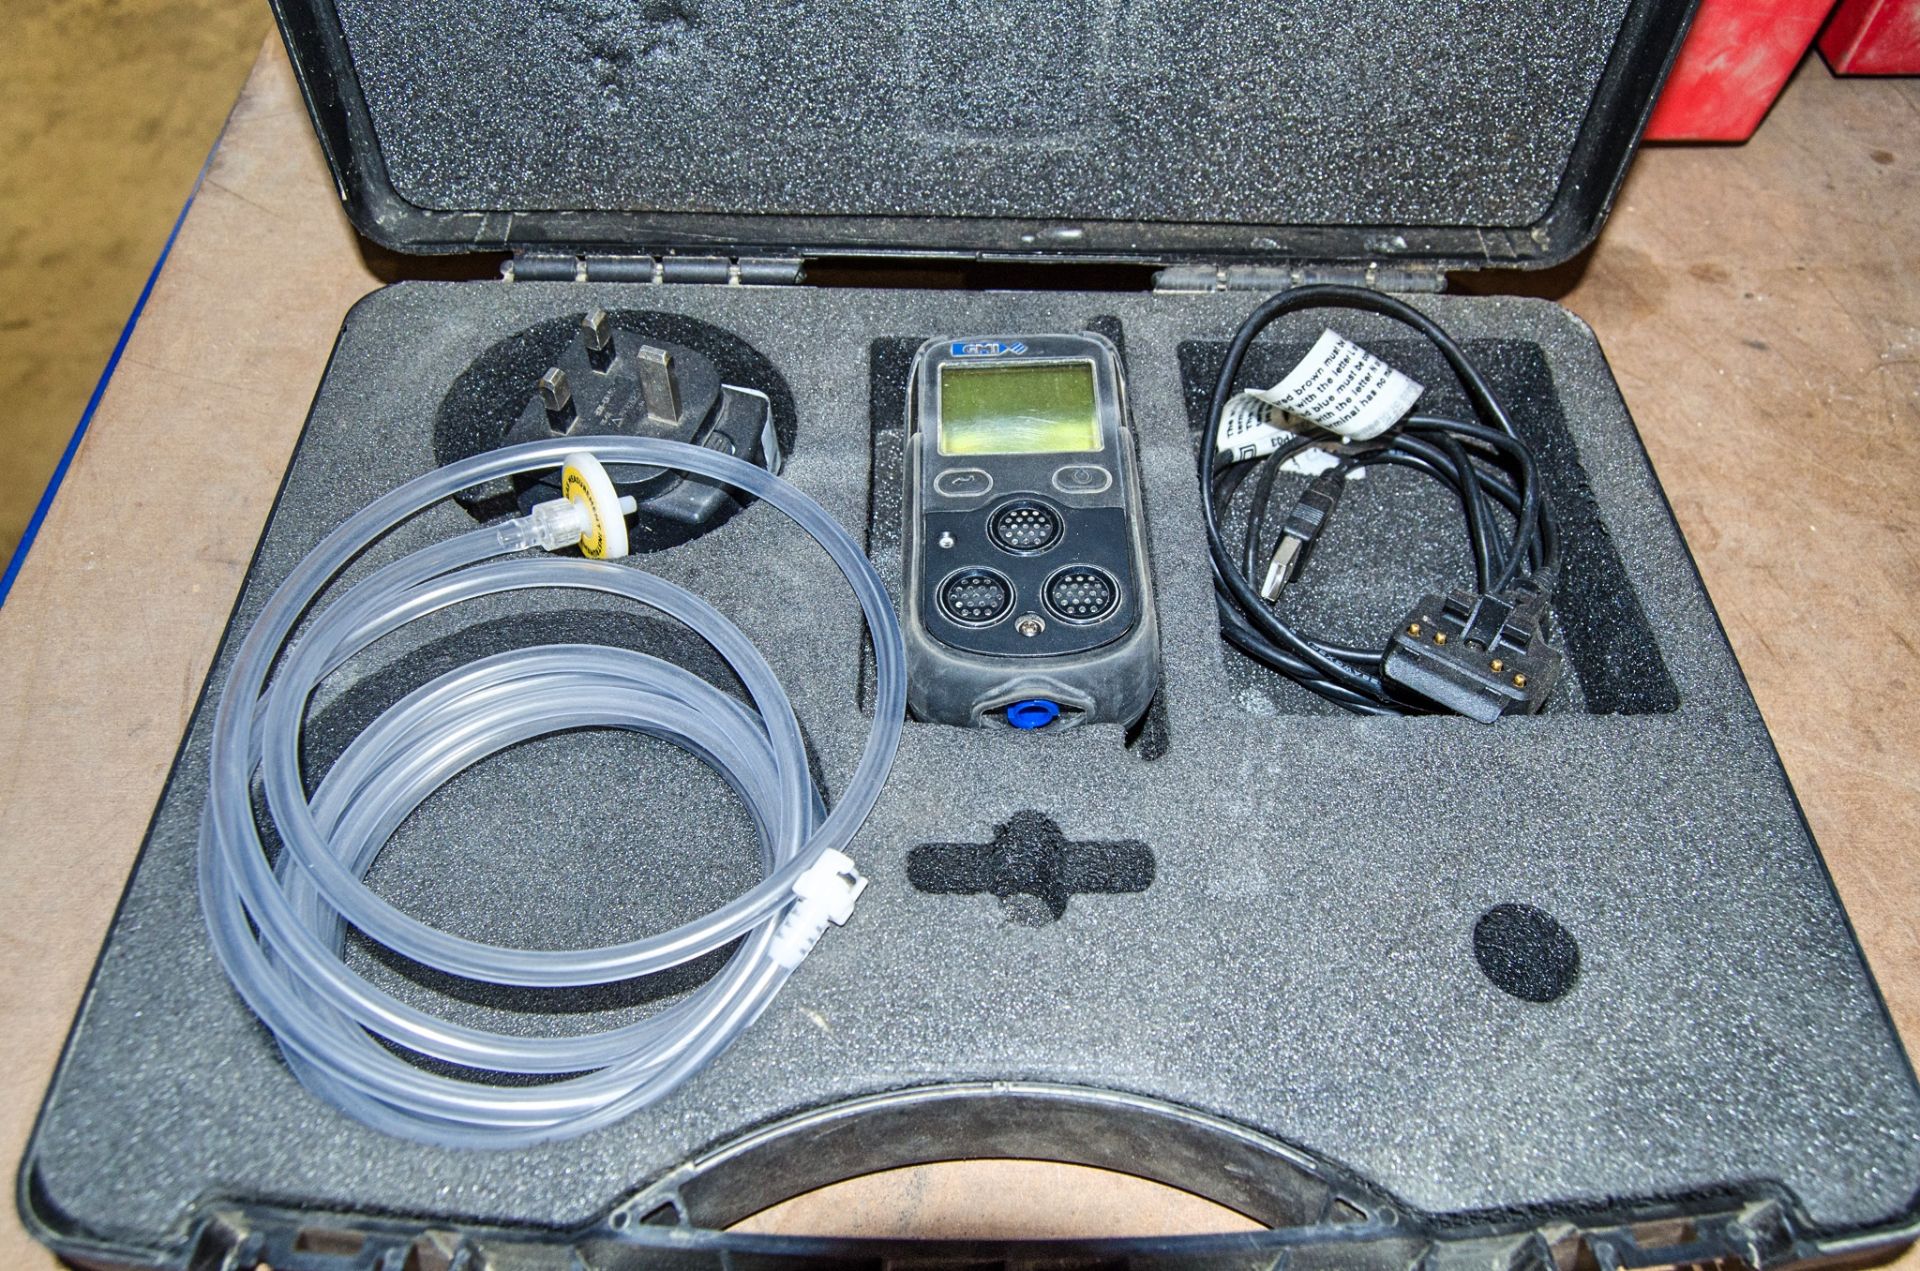 GMI PS241 gas detector c/w carry case